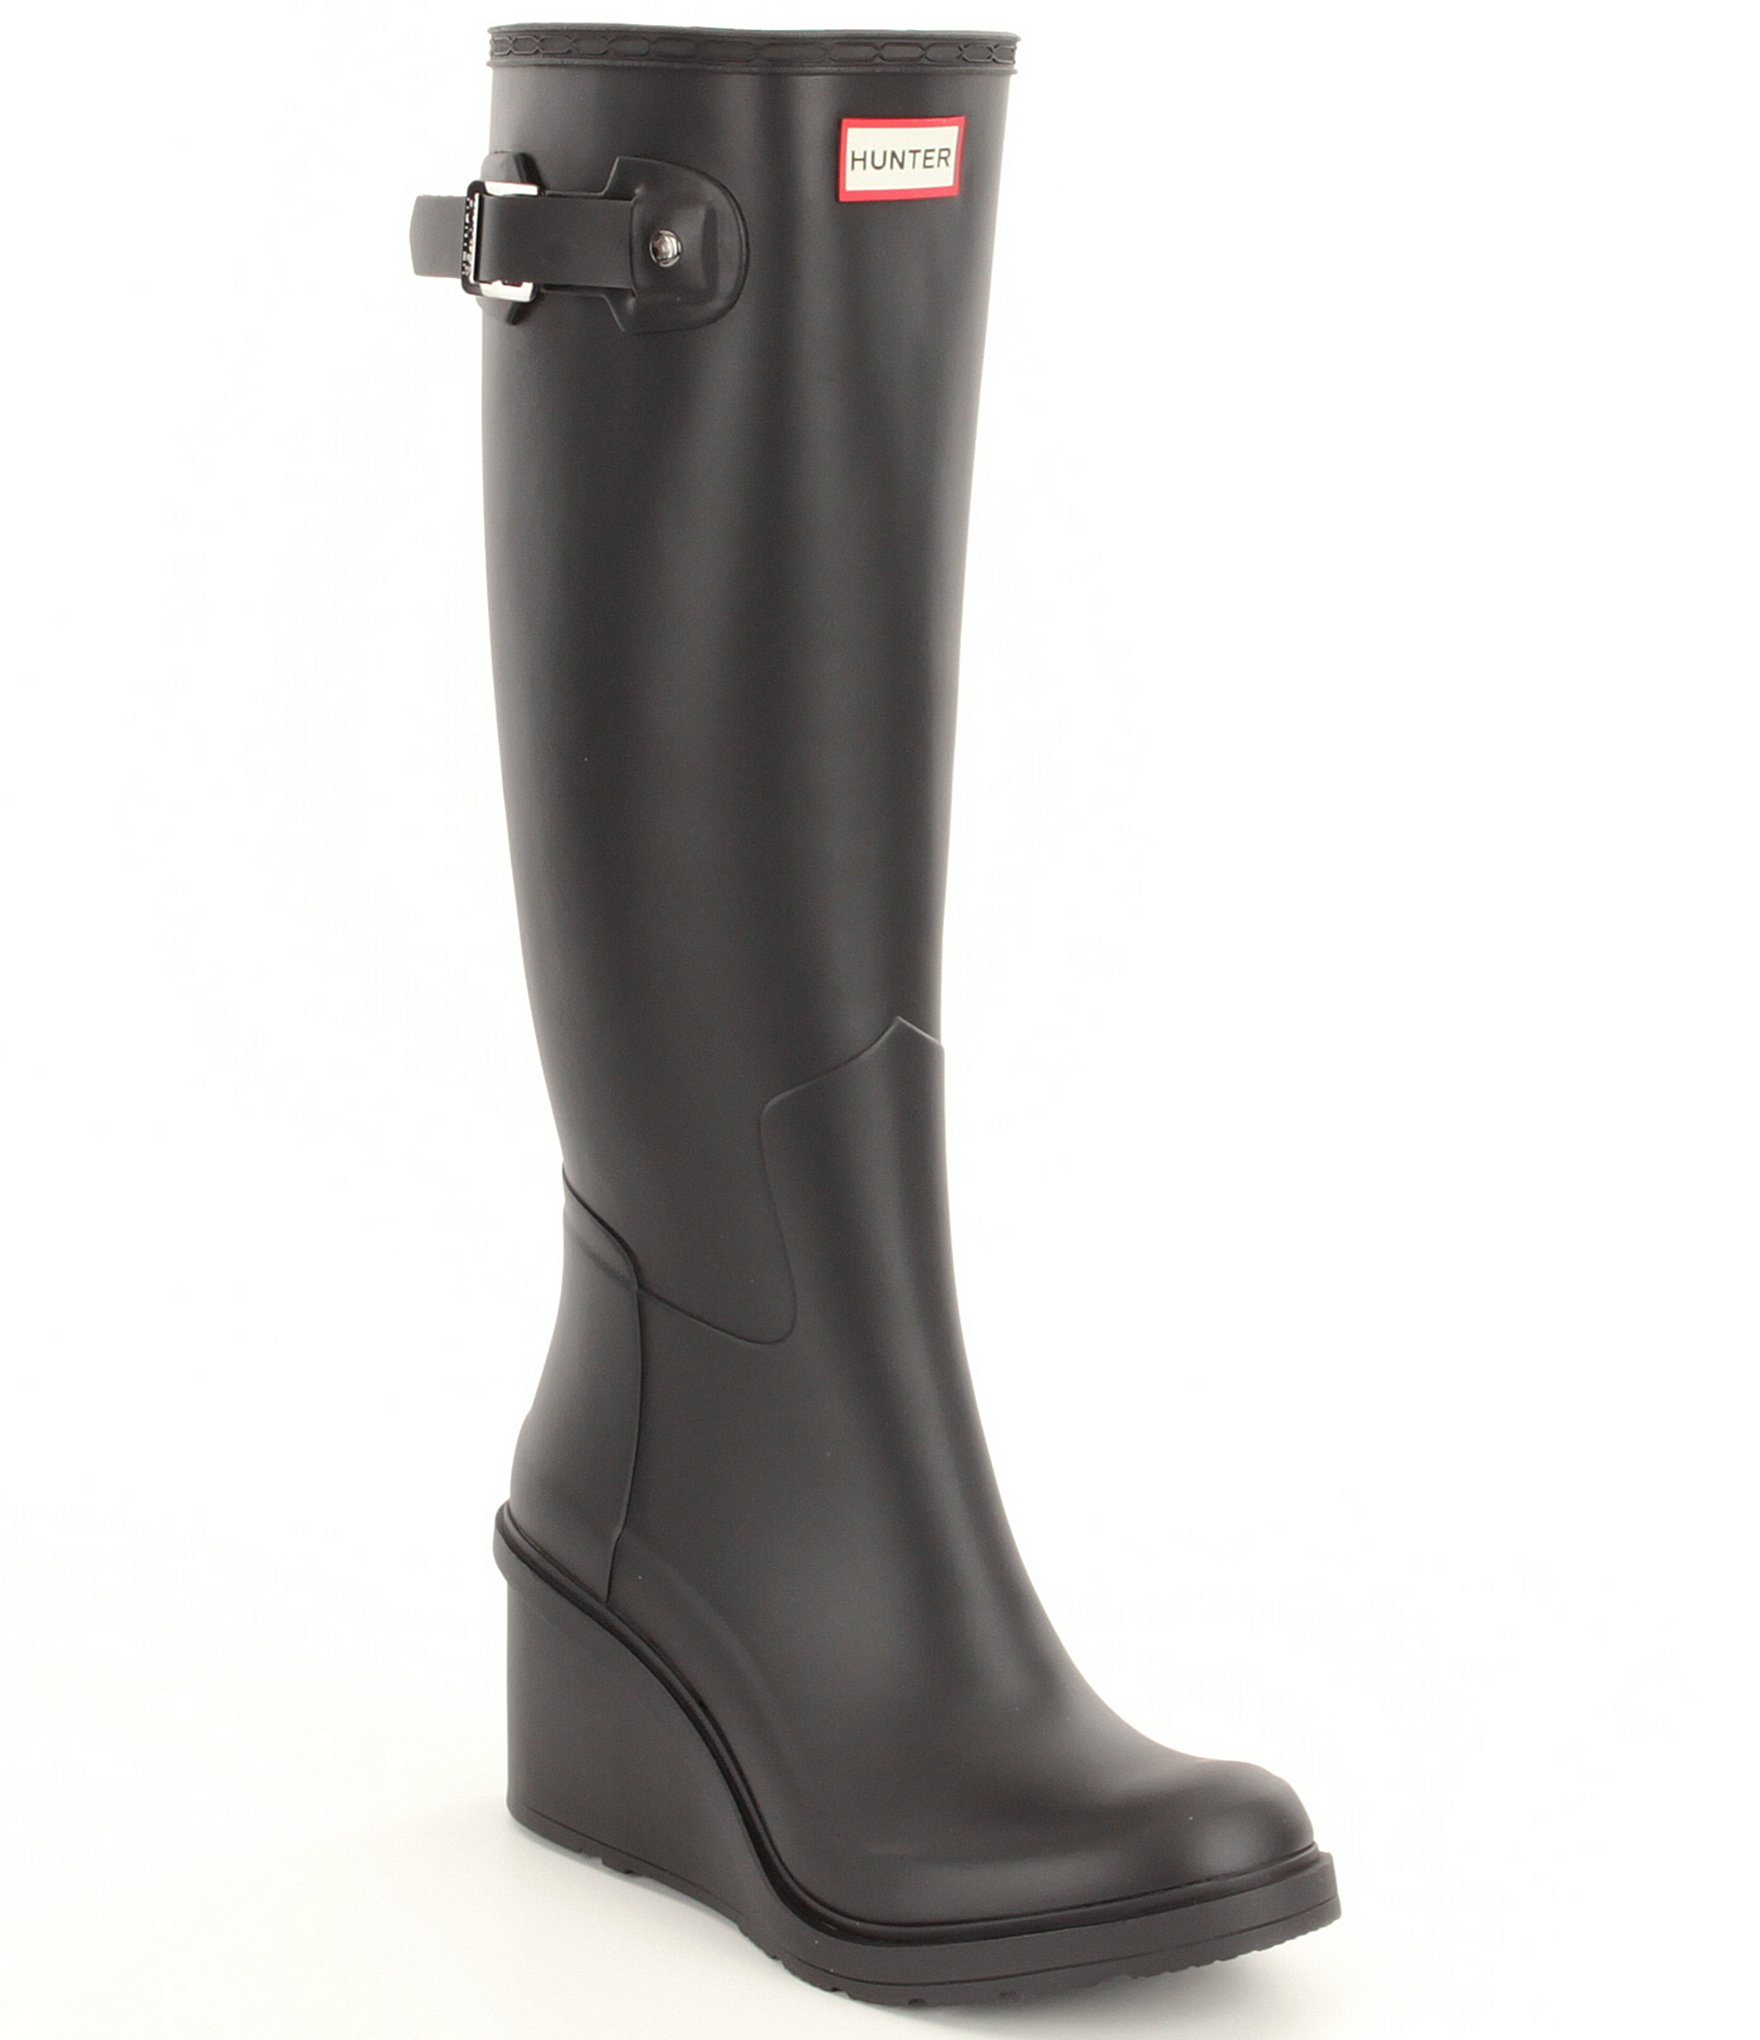 Lyst - Hunter Original Refined Mid Wedge Tall Rain Boots in Black